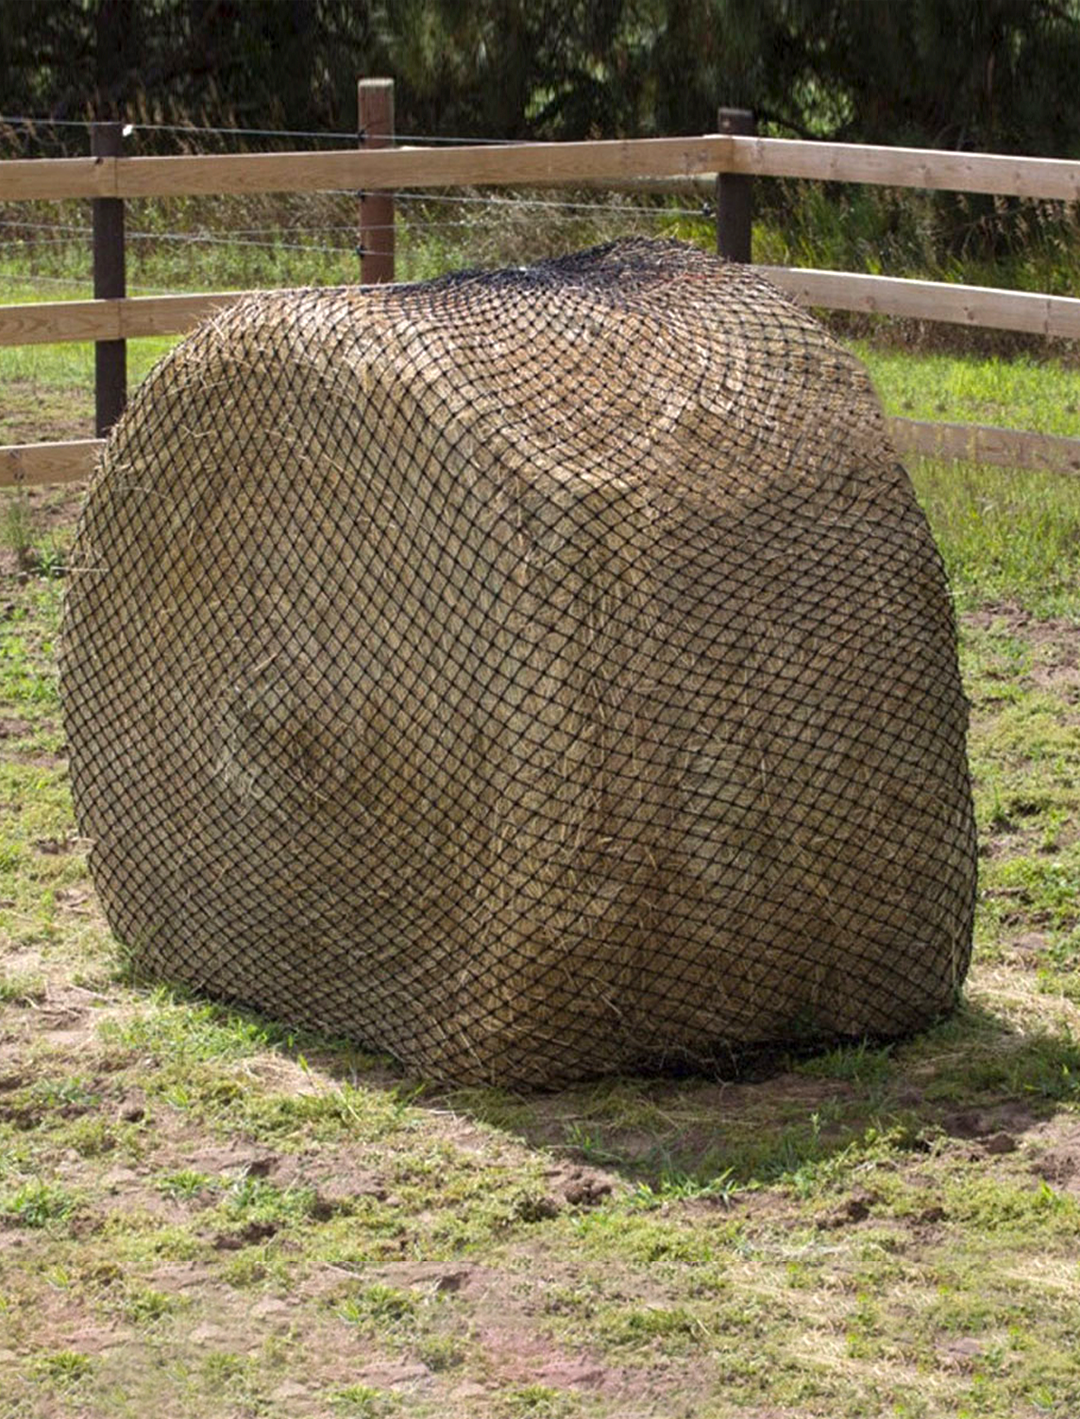 <img src="haynet.jpg" alt="Round bale hay net" />